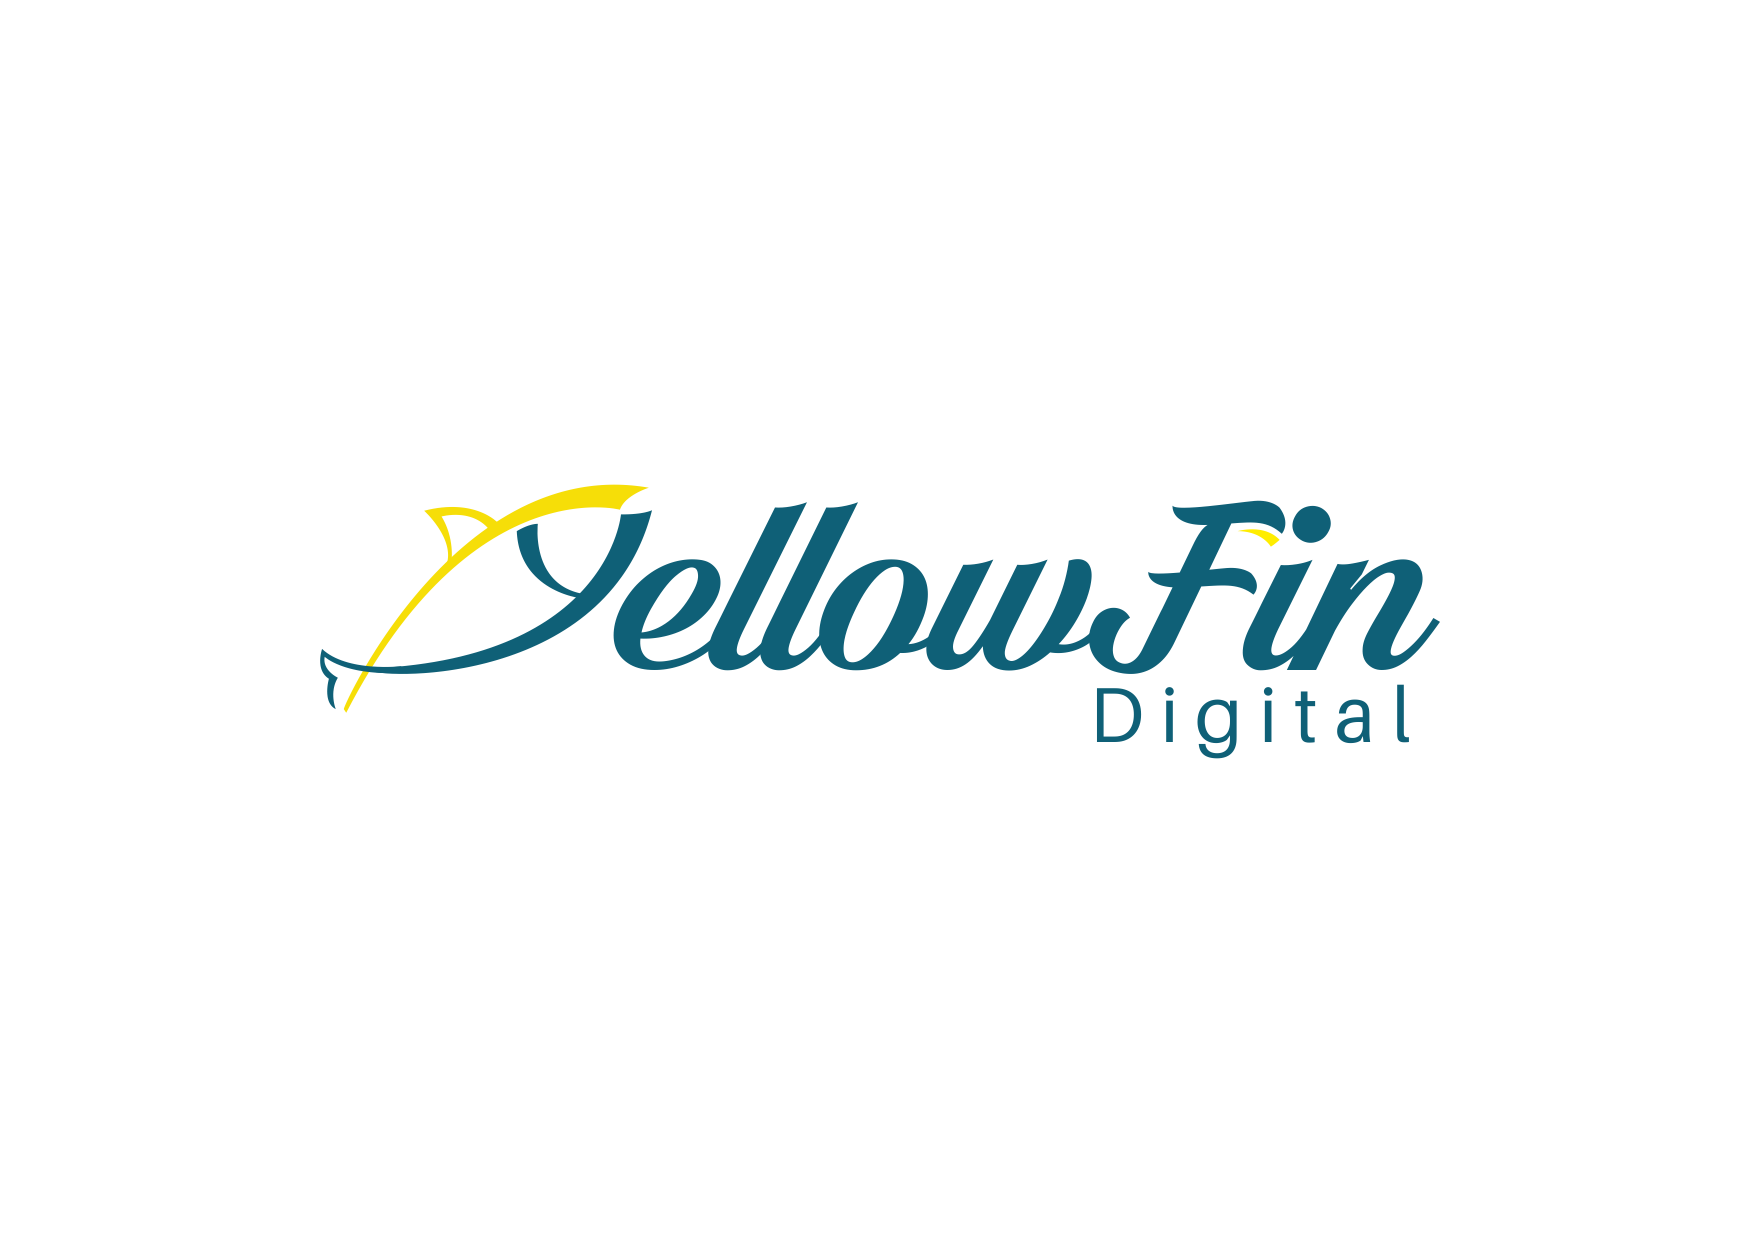 Top Online Marketing Company Logo: YellowFin Digital